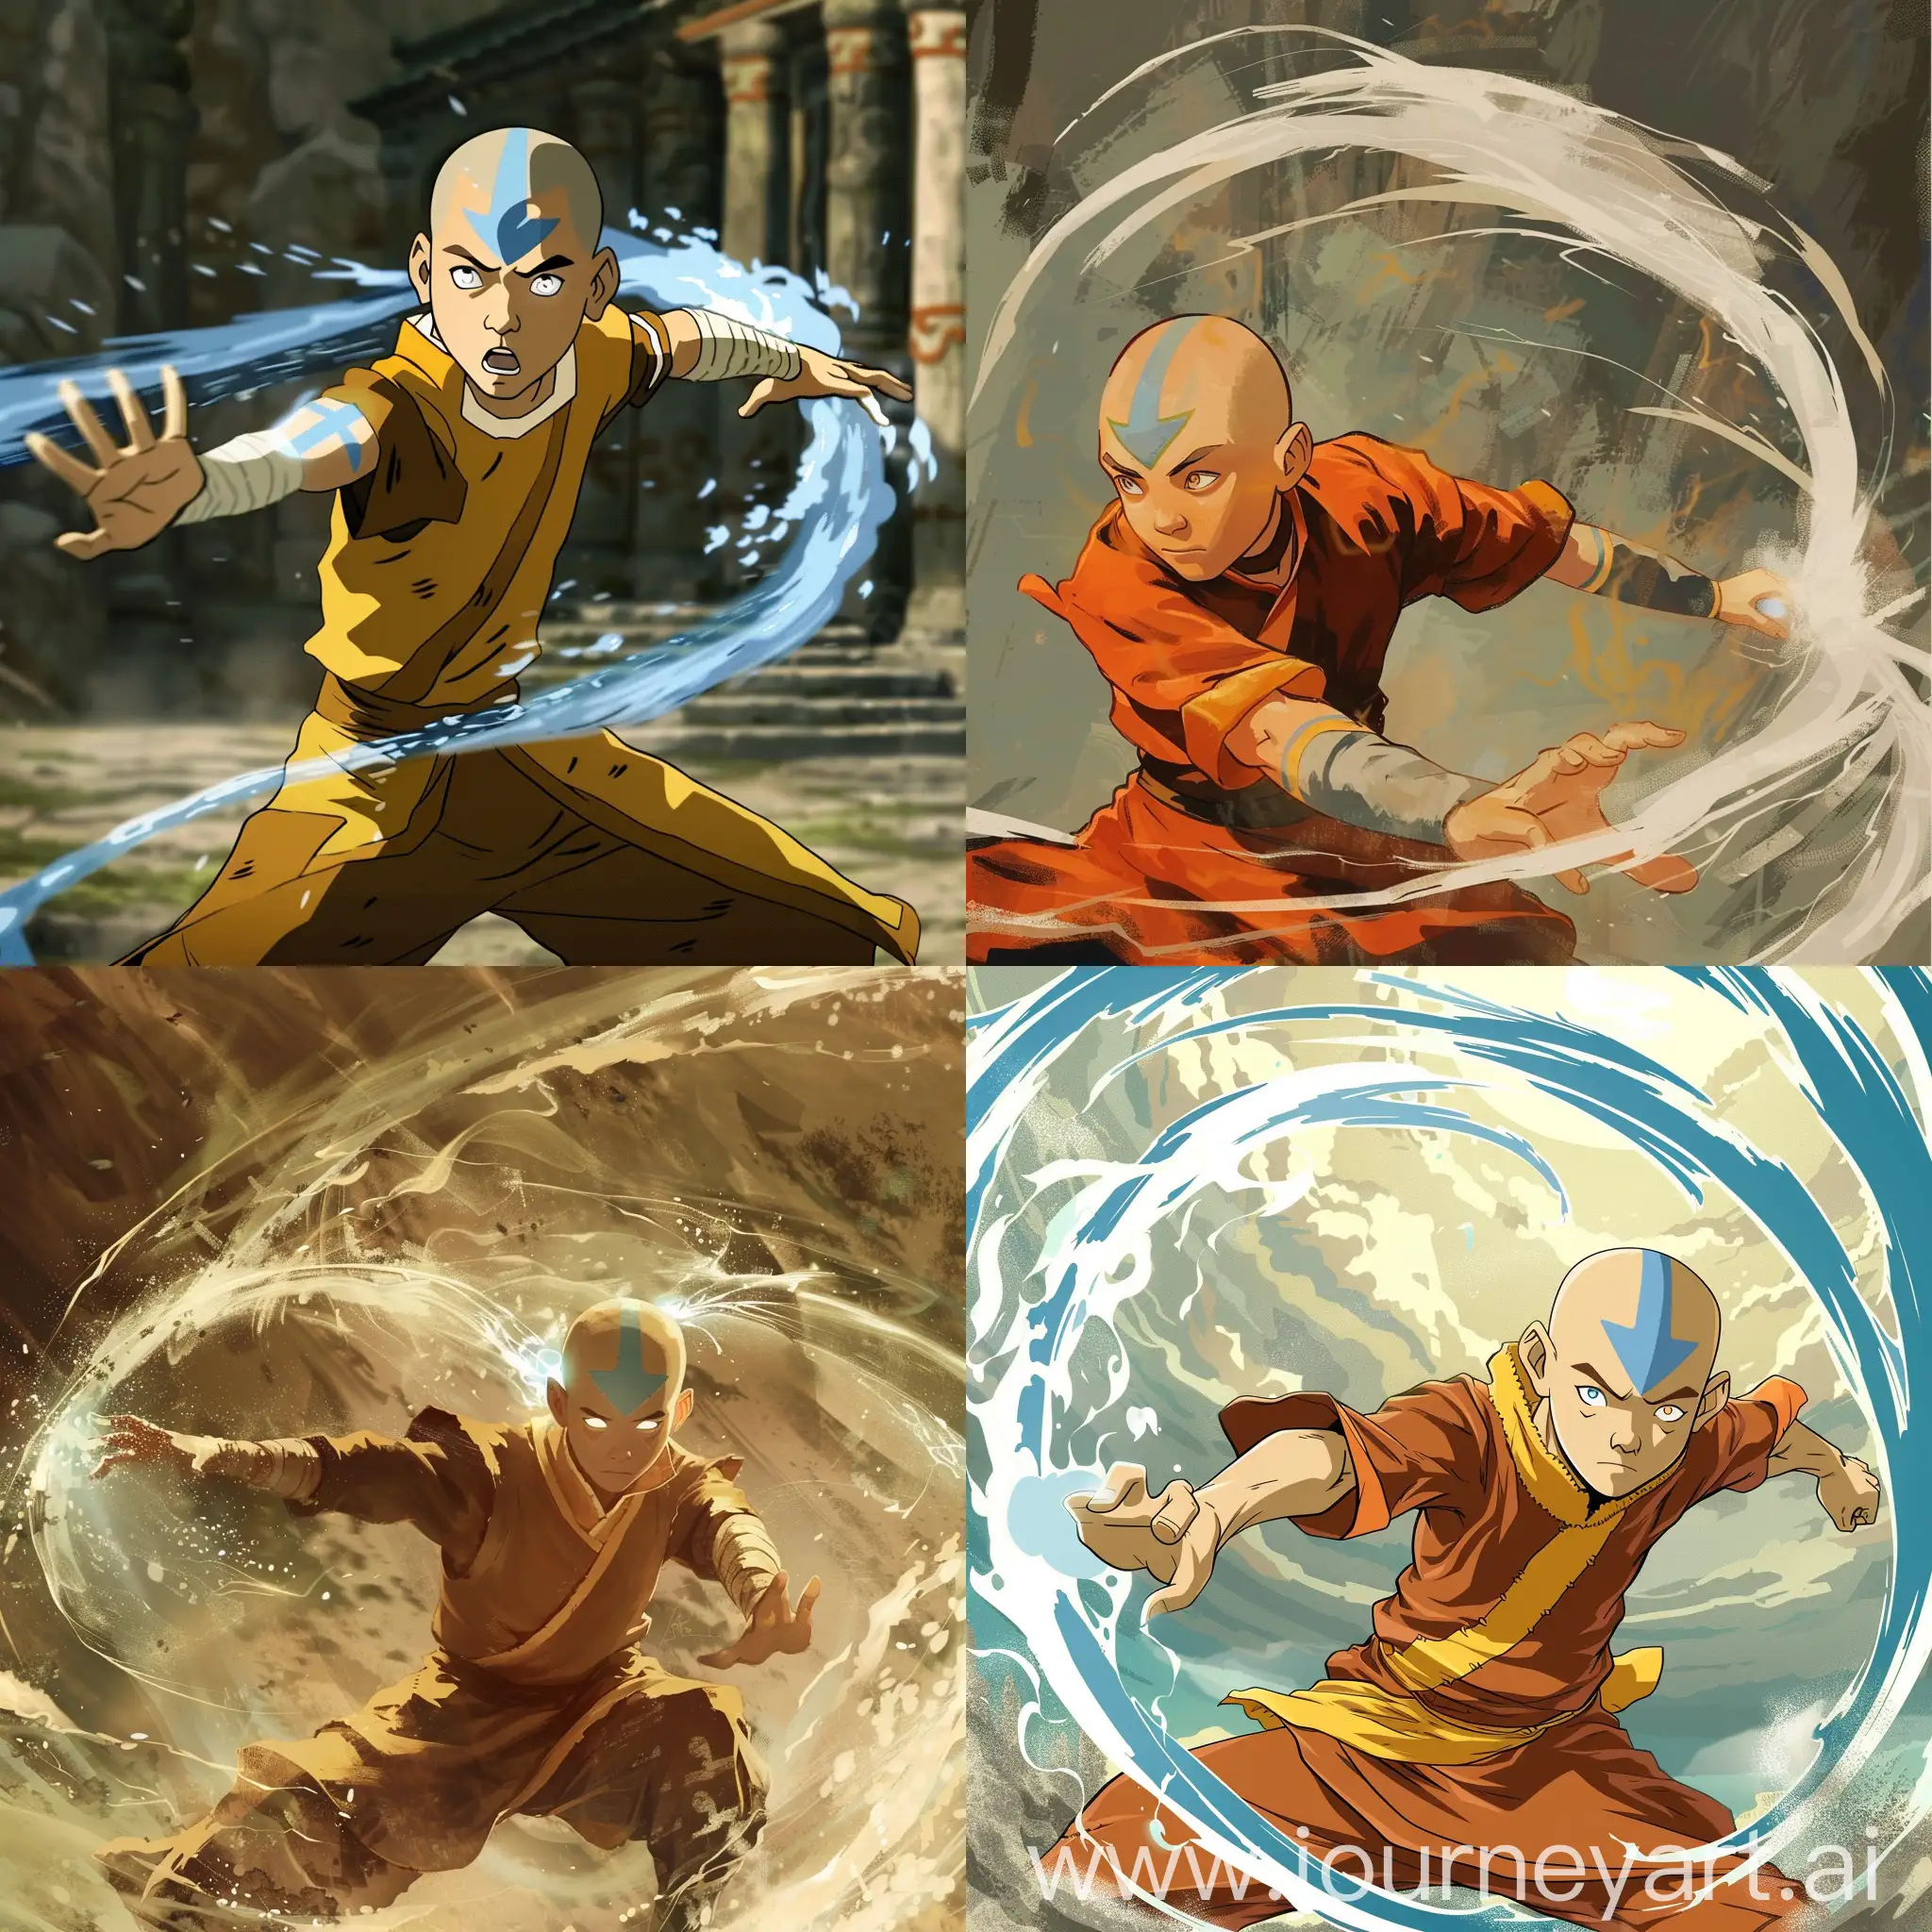 Avatar-Aang-Masterfully-Bending-Air-Astonishing-Display-of-Elemental-Power